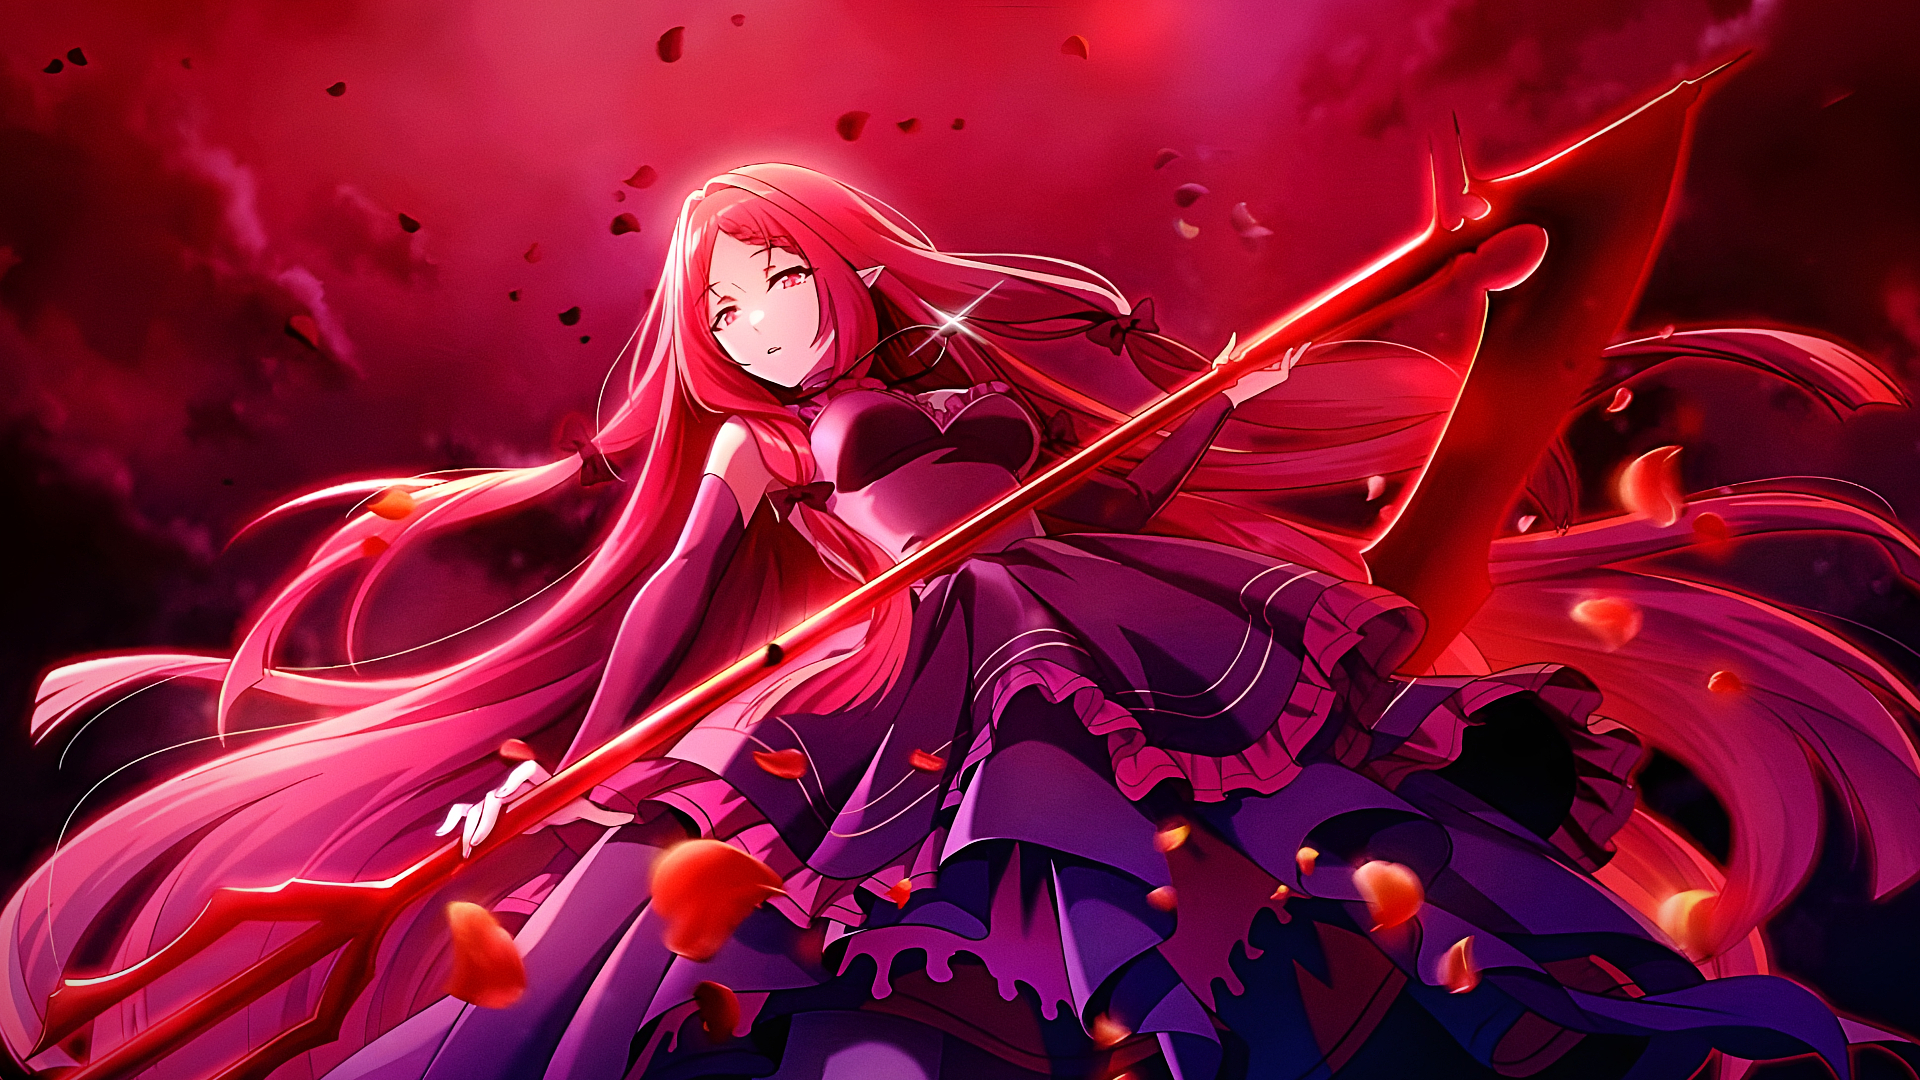 The Eminence In Shadow Anime Vampire Girl Scythe Red Moon Anime Girls Long Hair Frill Dress Looking  1920x1080